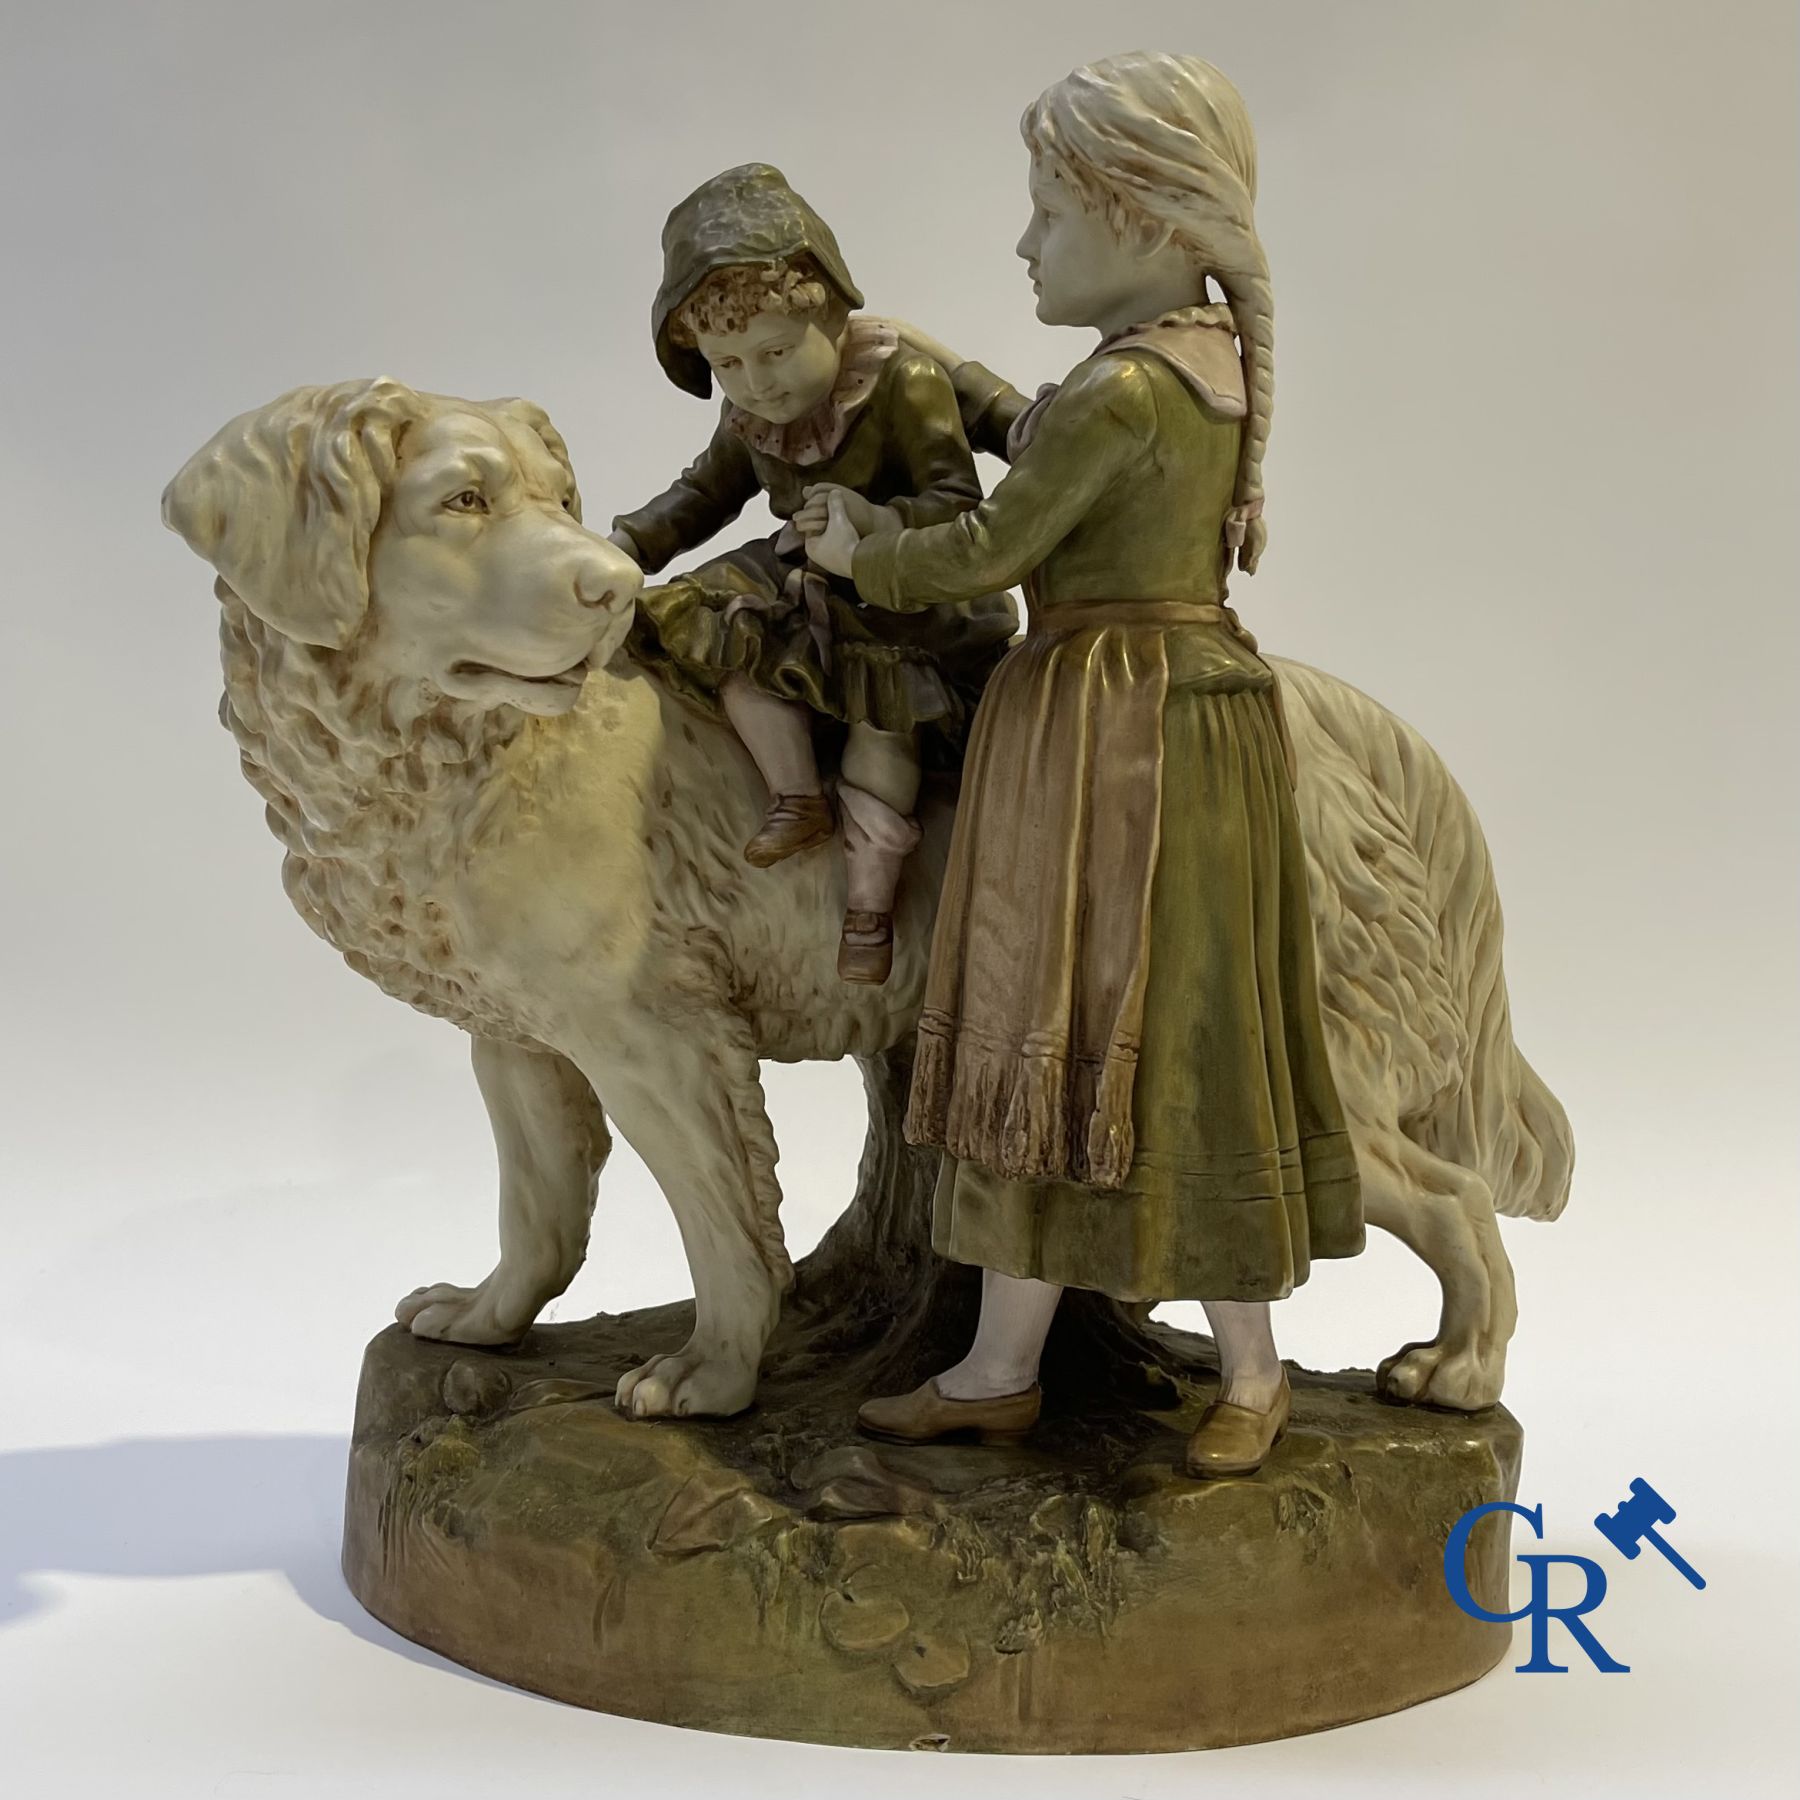 Porcelain: Royal Dux. A polychrome representation of a Saint Bernard dog with children.